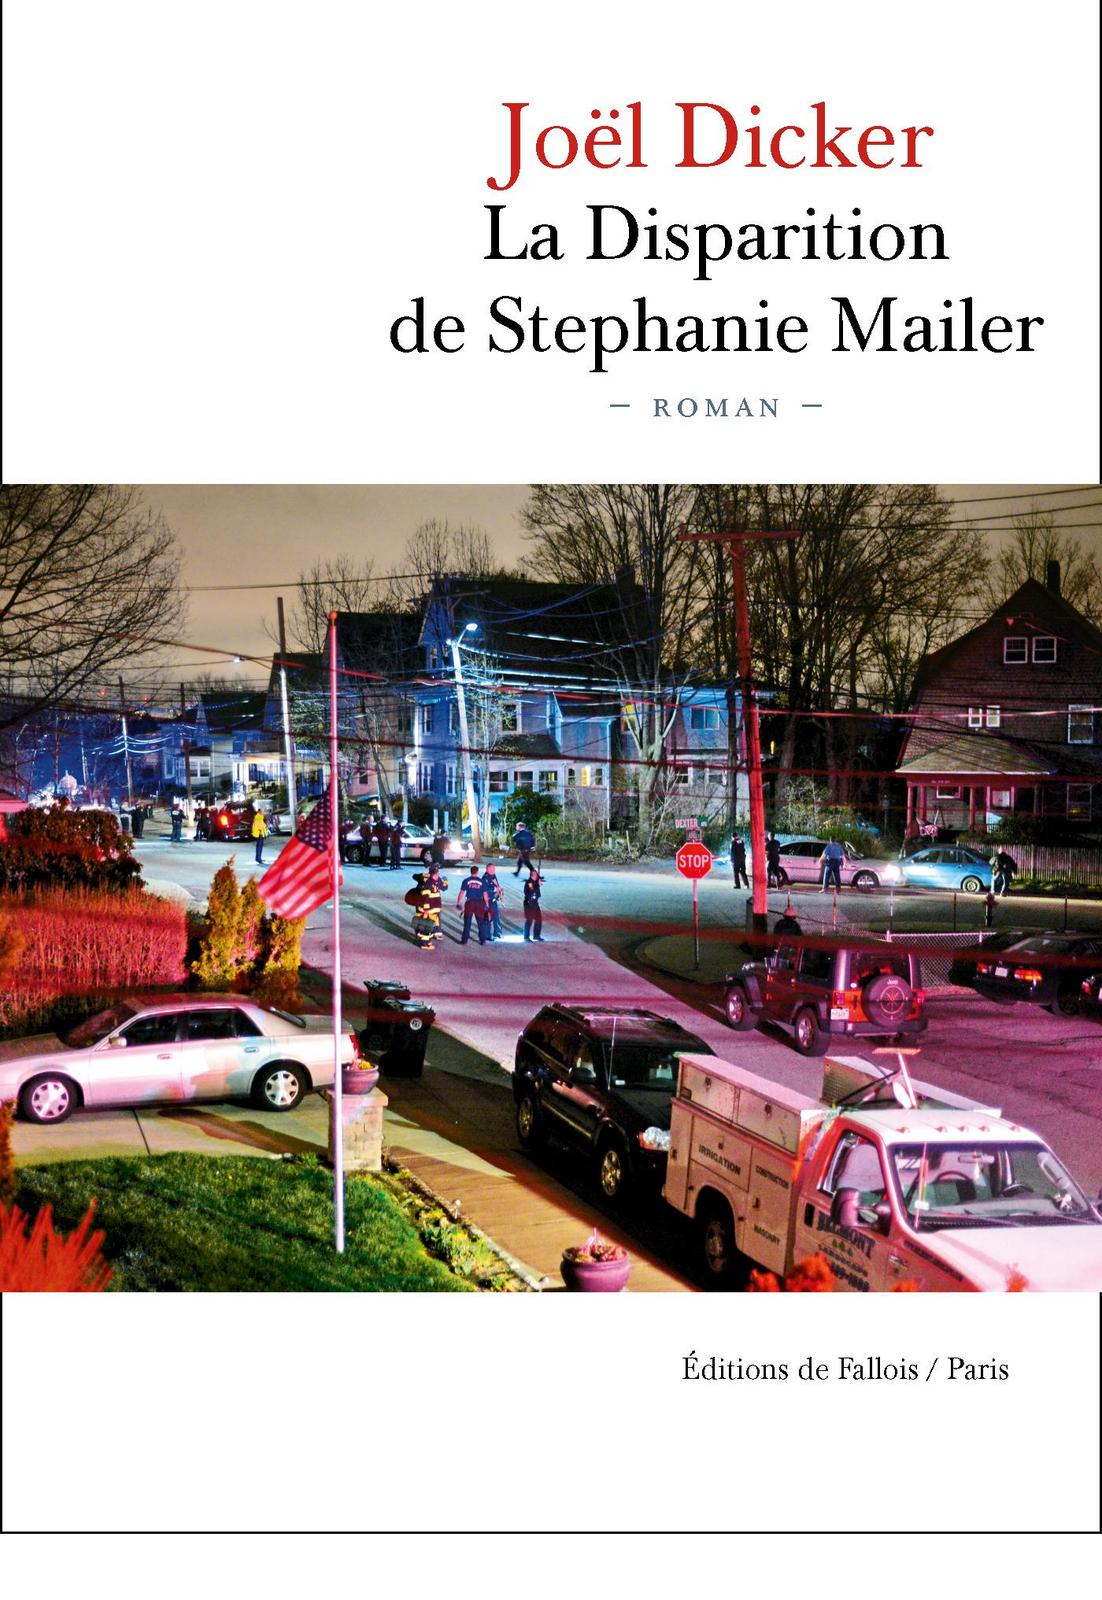 Joël Dicker: La Disparition de Stephanie Mailer (French language, 2018)